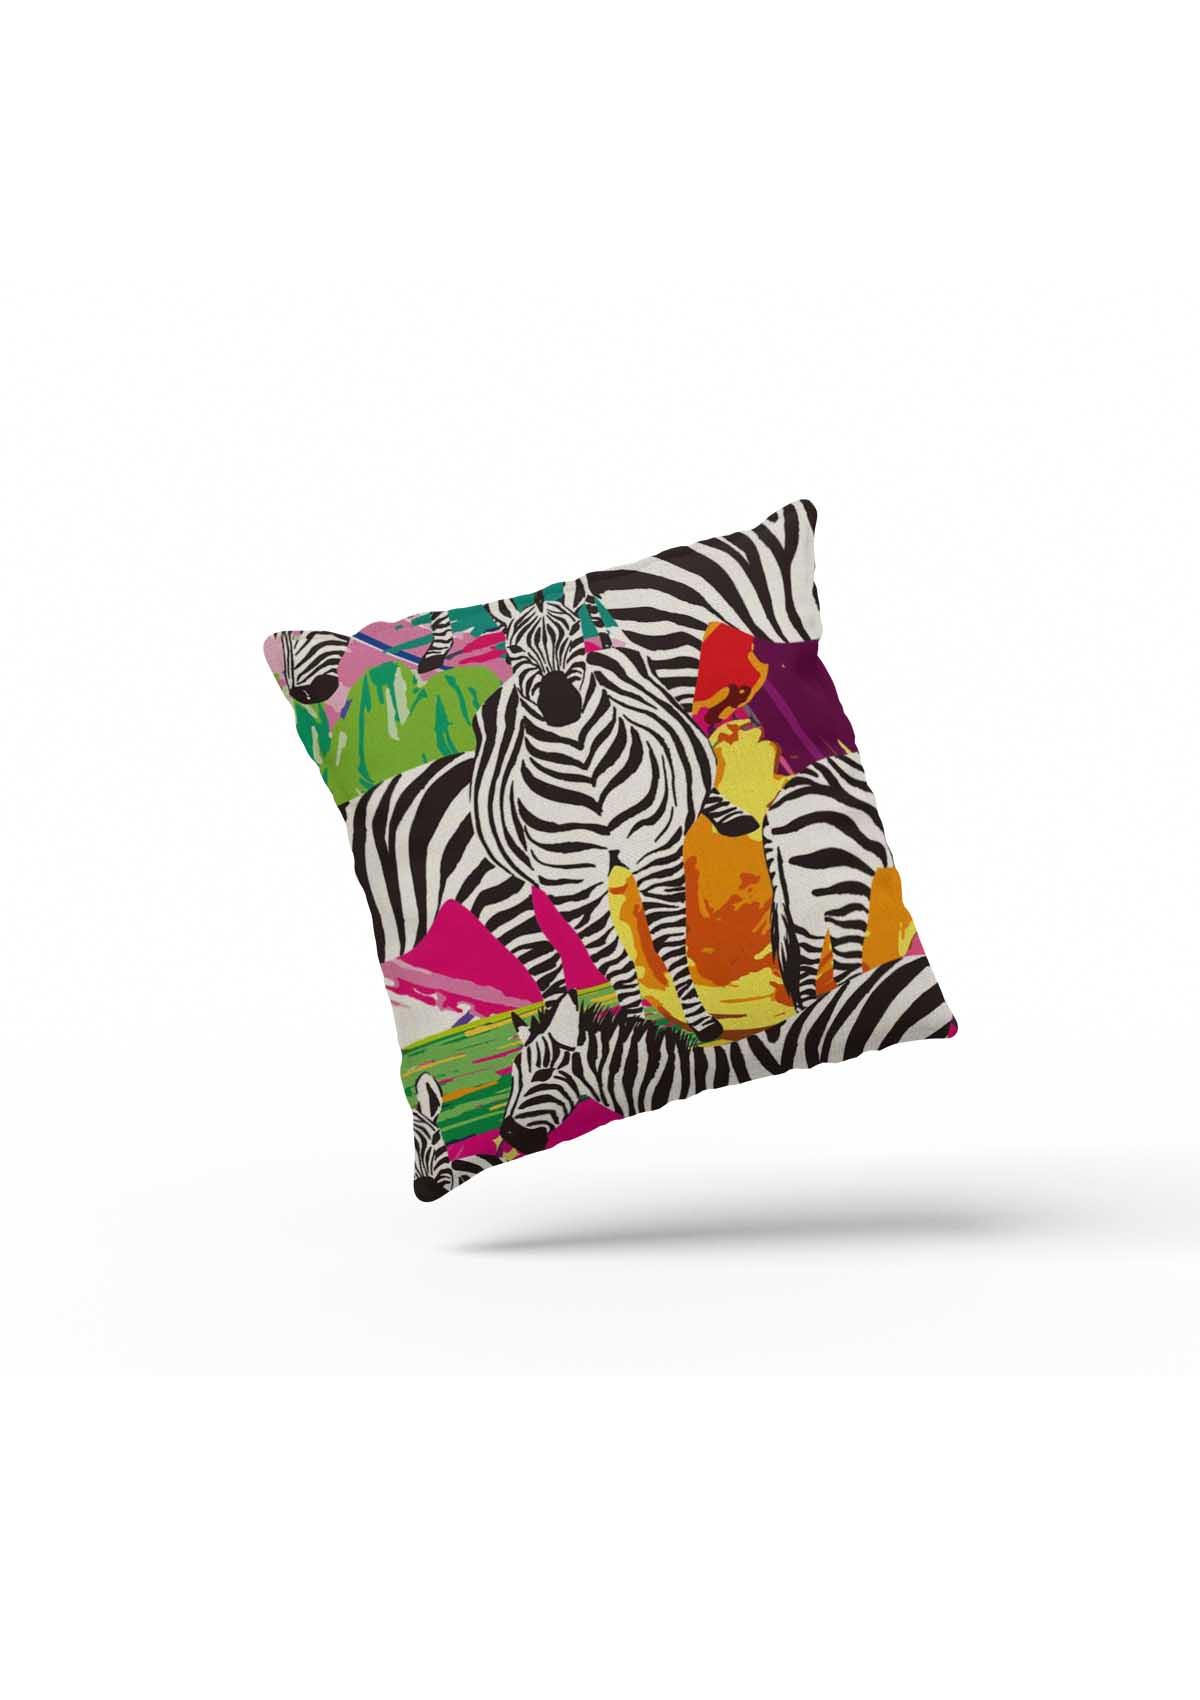 Zebra "ZebraPrintique" Print Cushion Covers